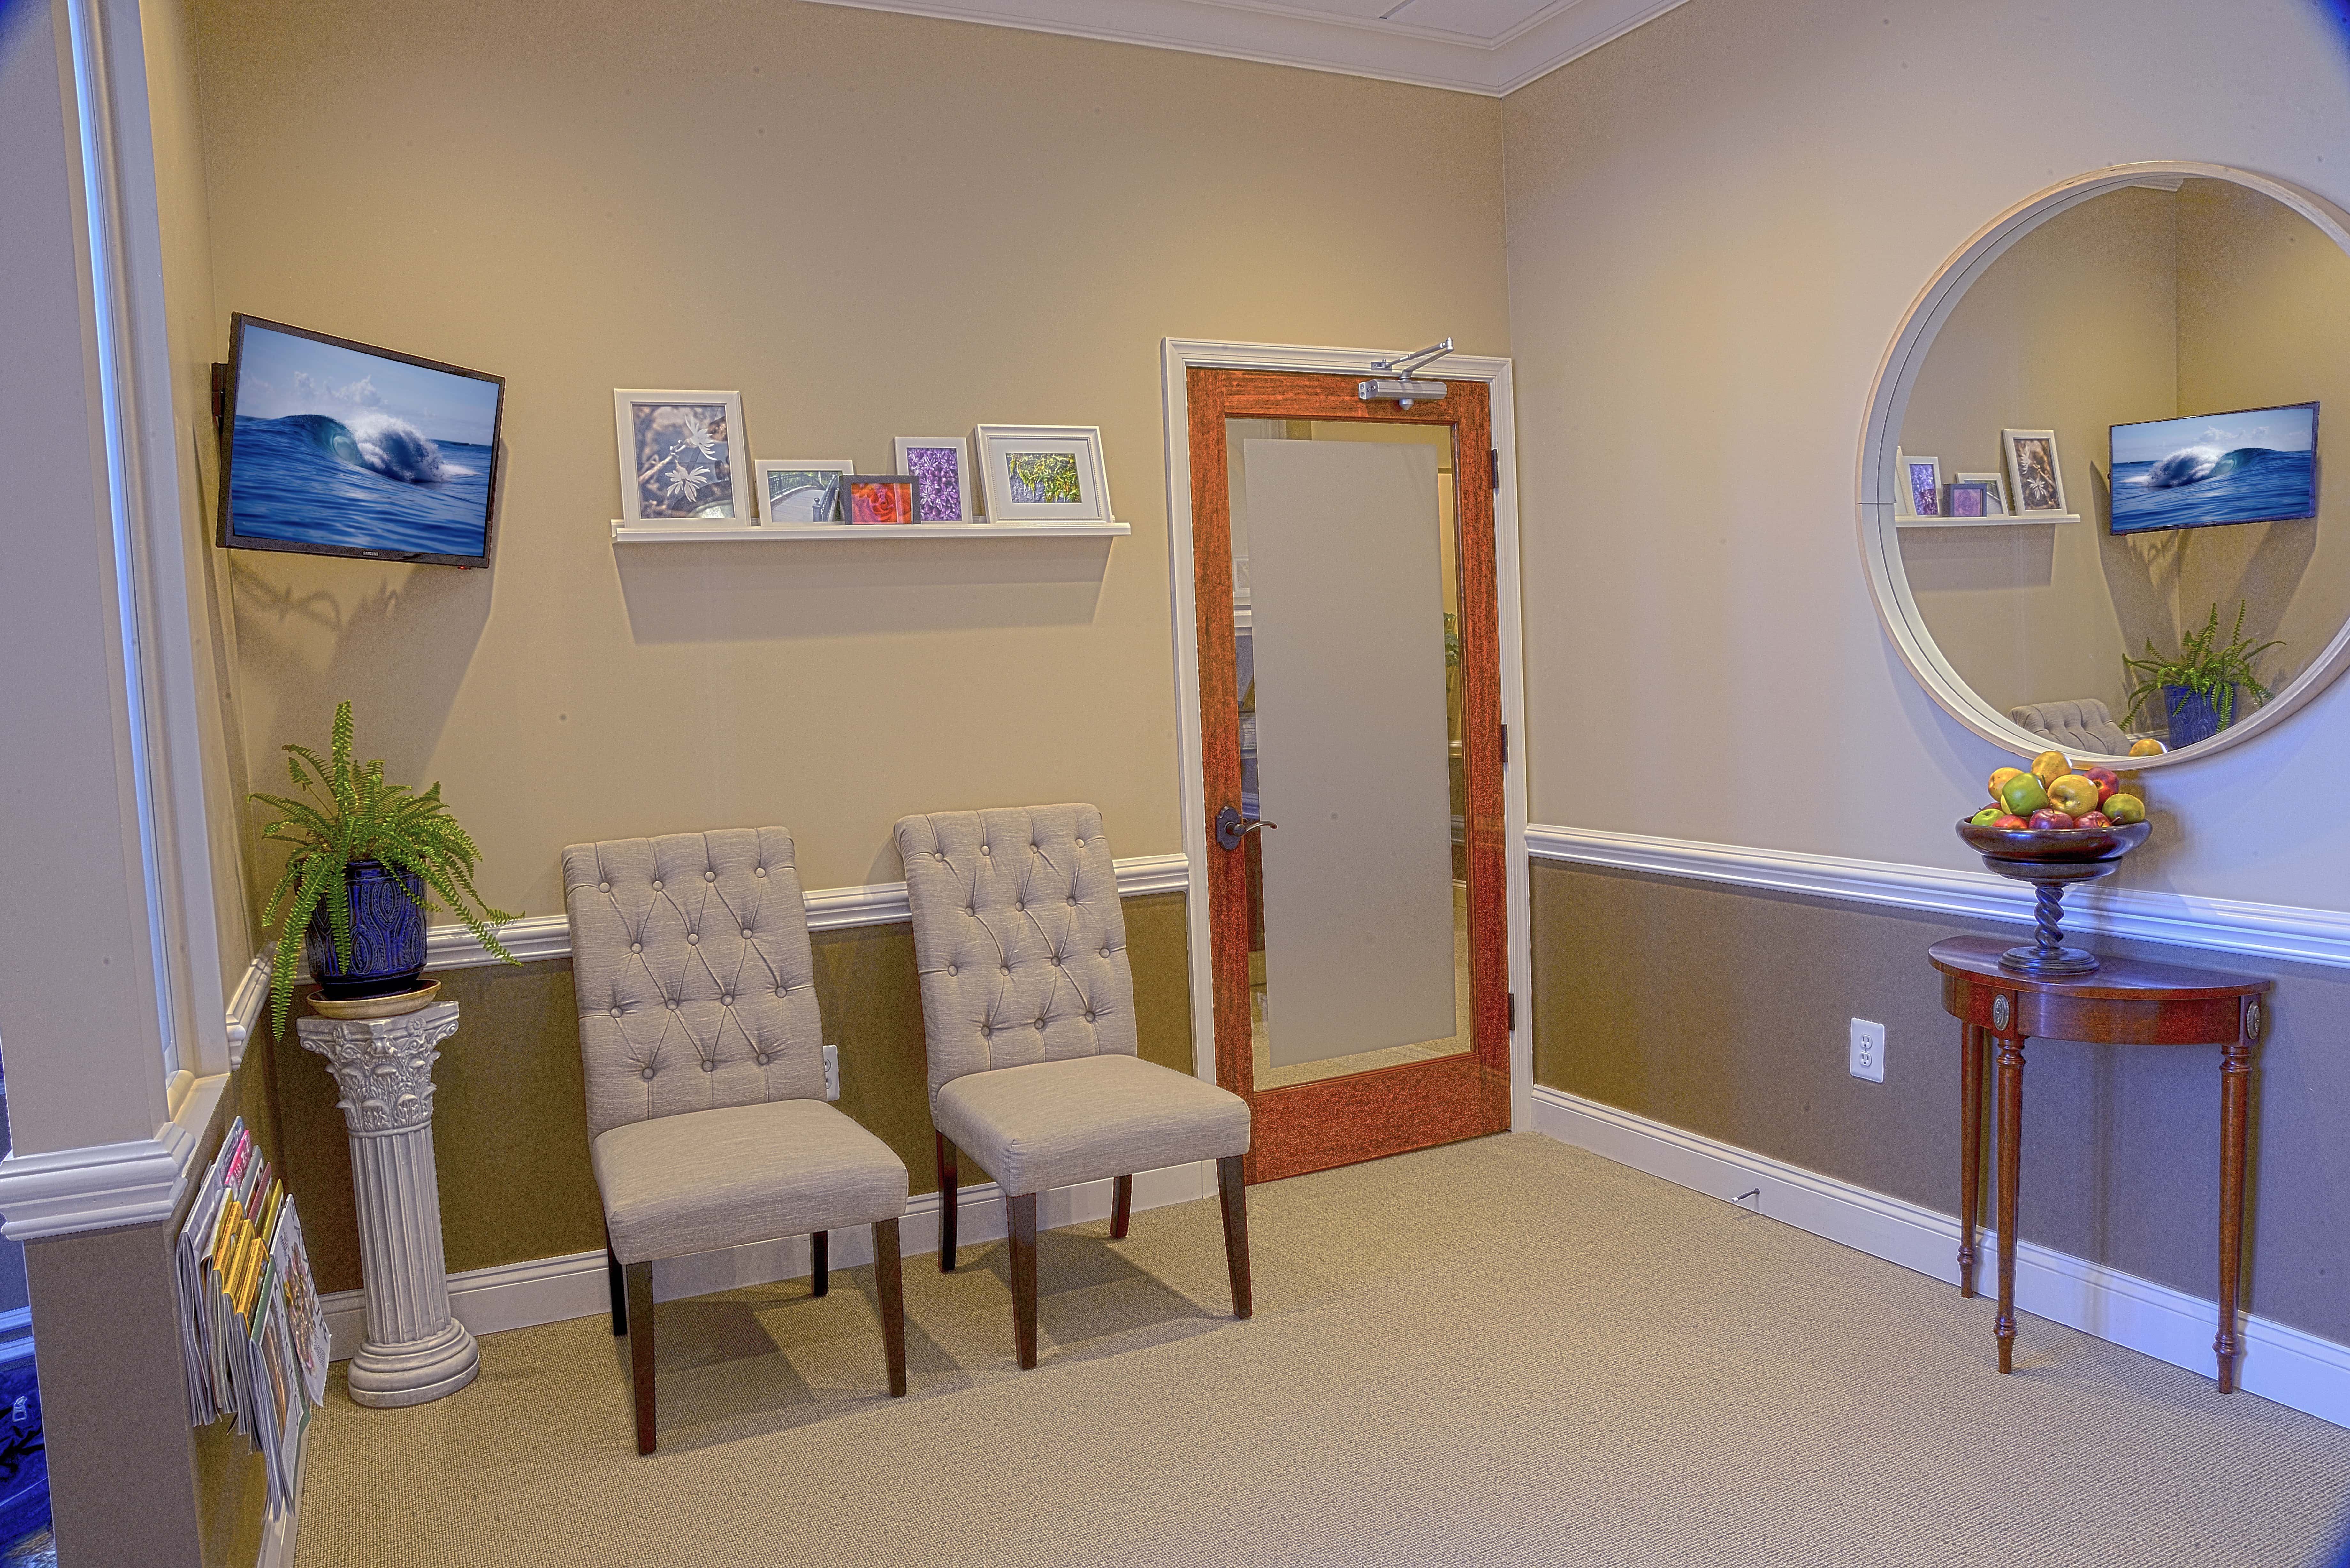 North River Dental Care - Fredericksburg, VA, US, cosmetic dentistry